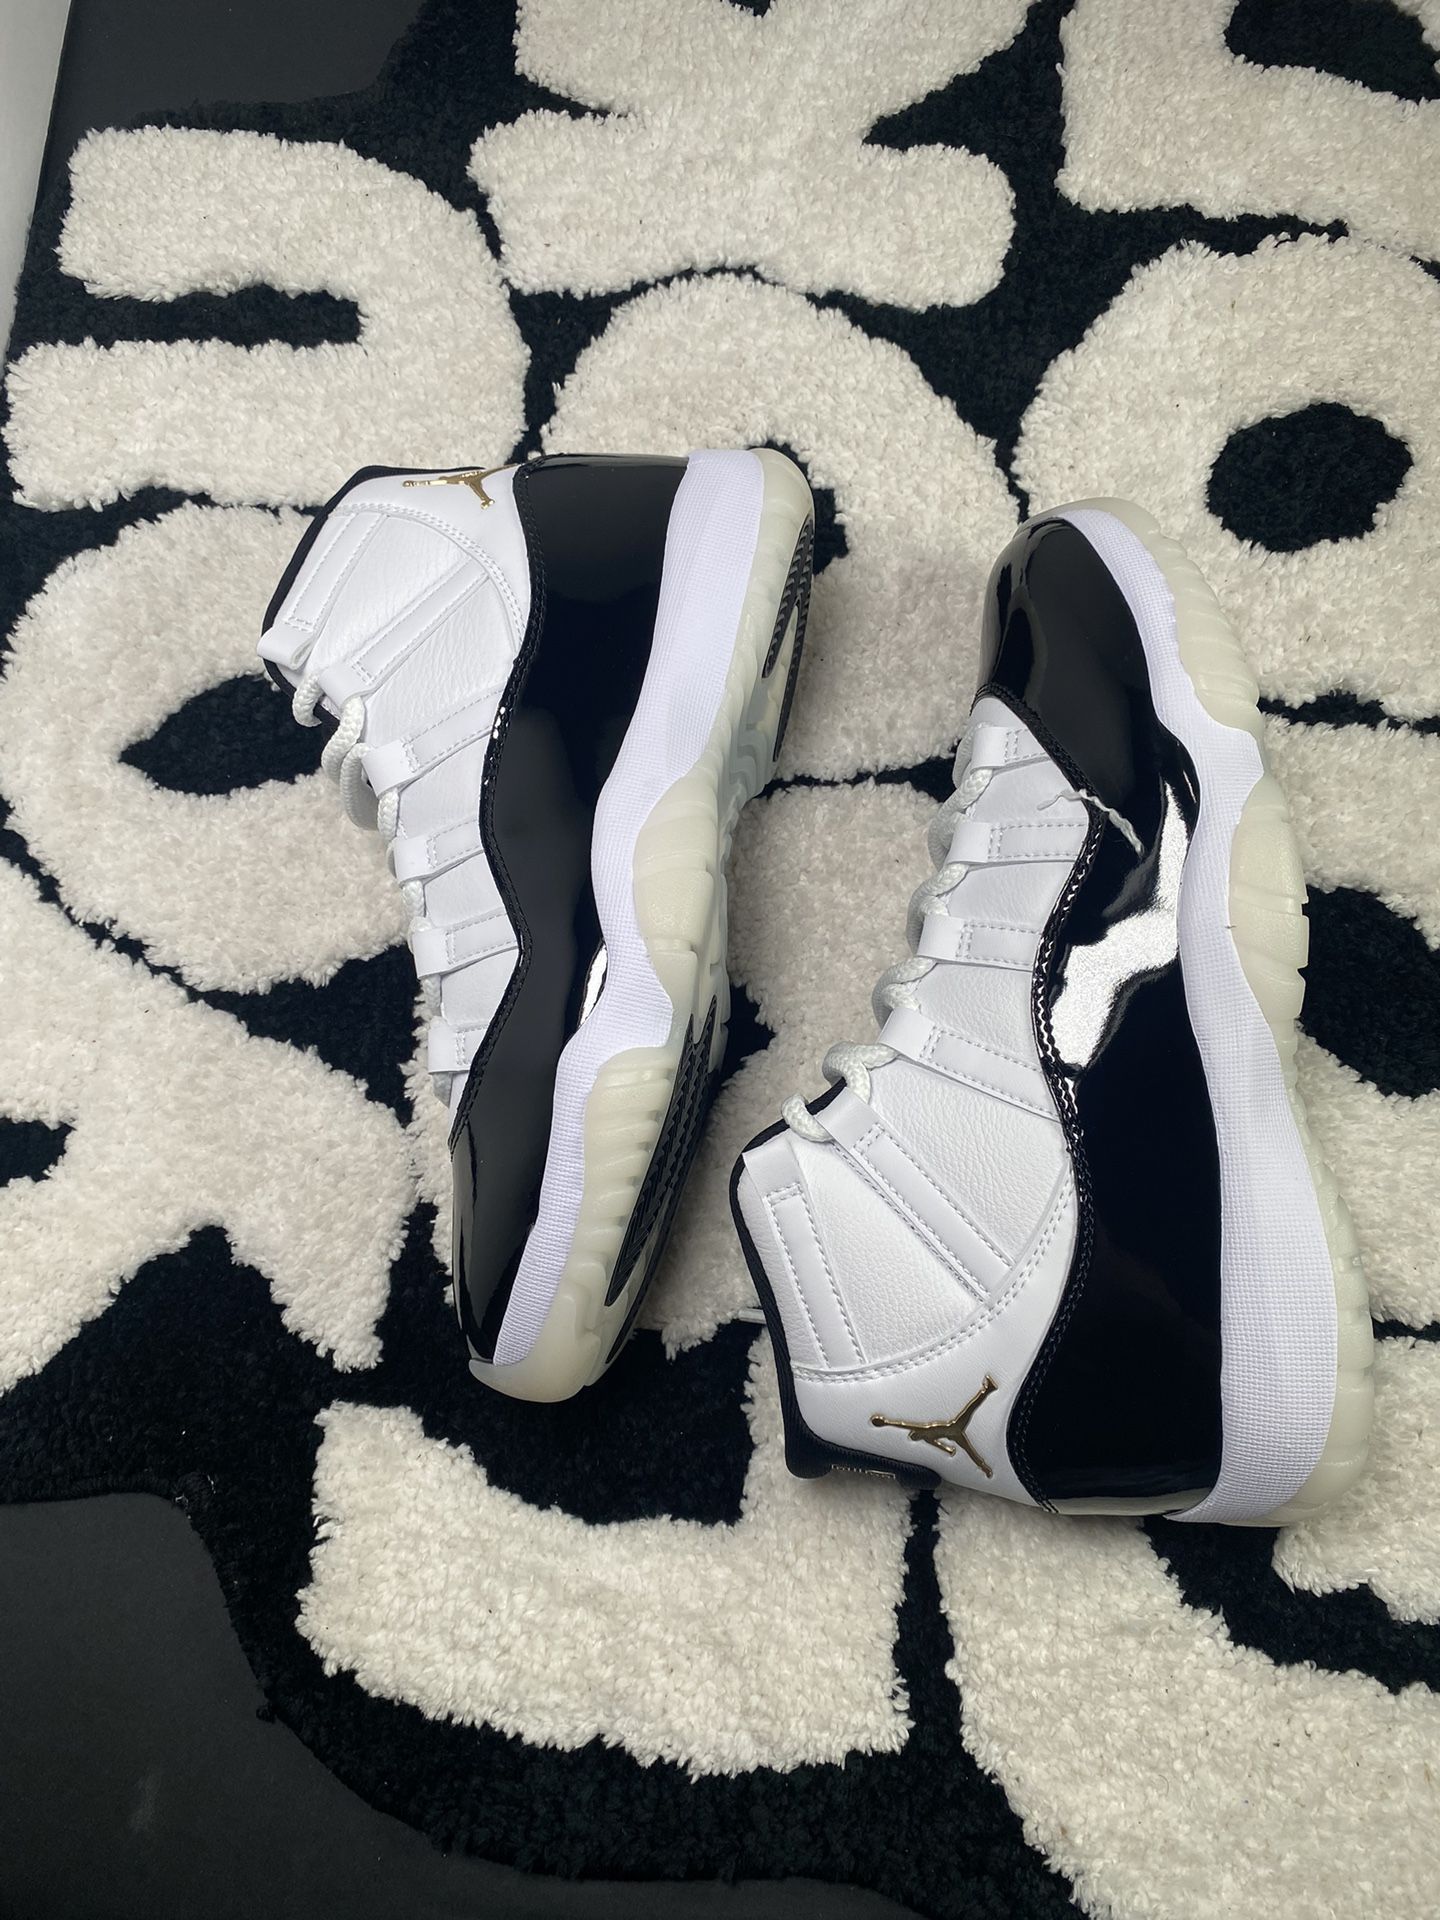 Jordan - Nike - Yeezy - Adidas Shoes